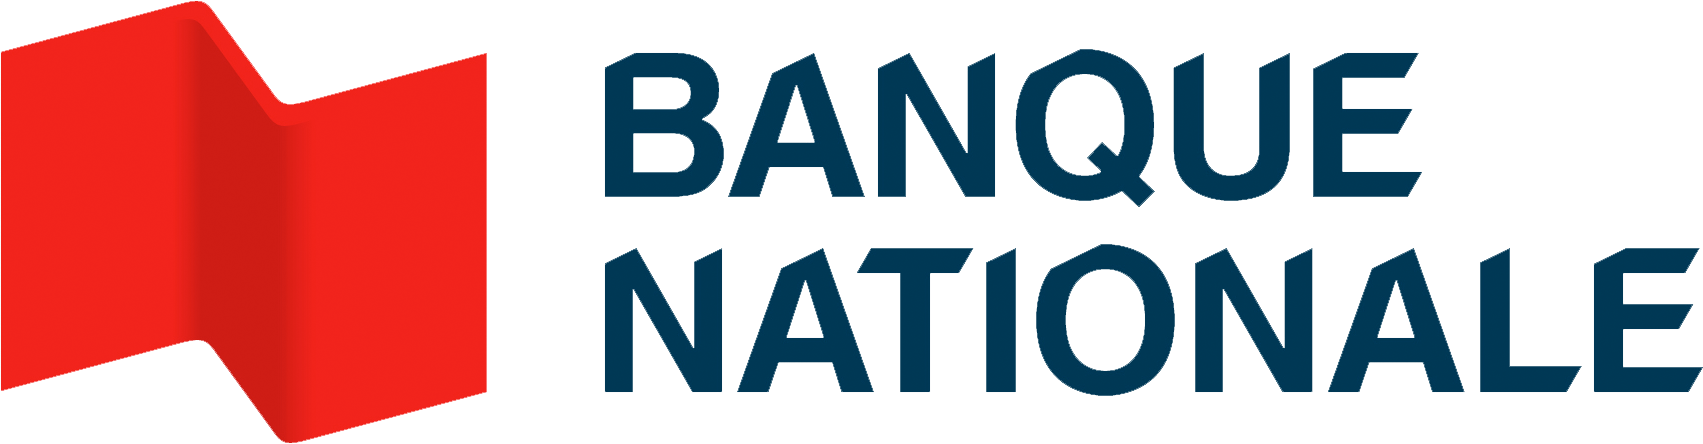 Banque Nationale Logo photo - 1